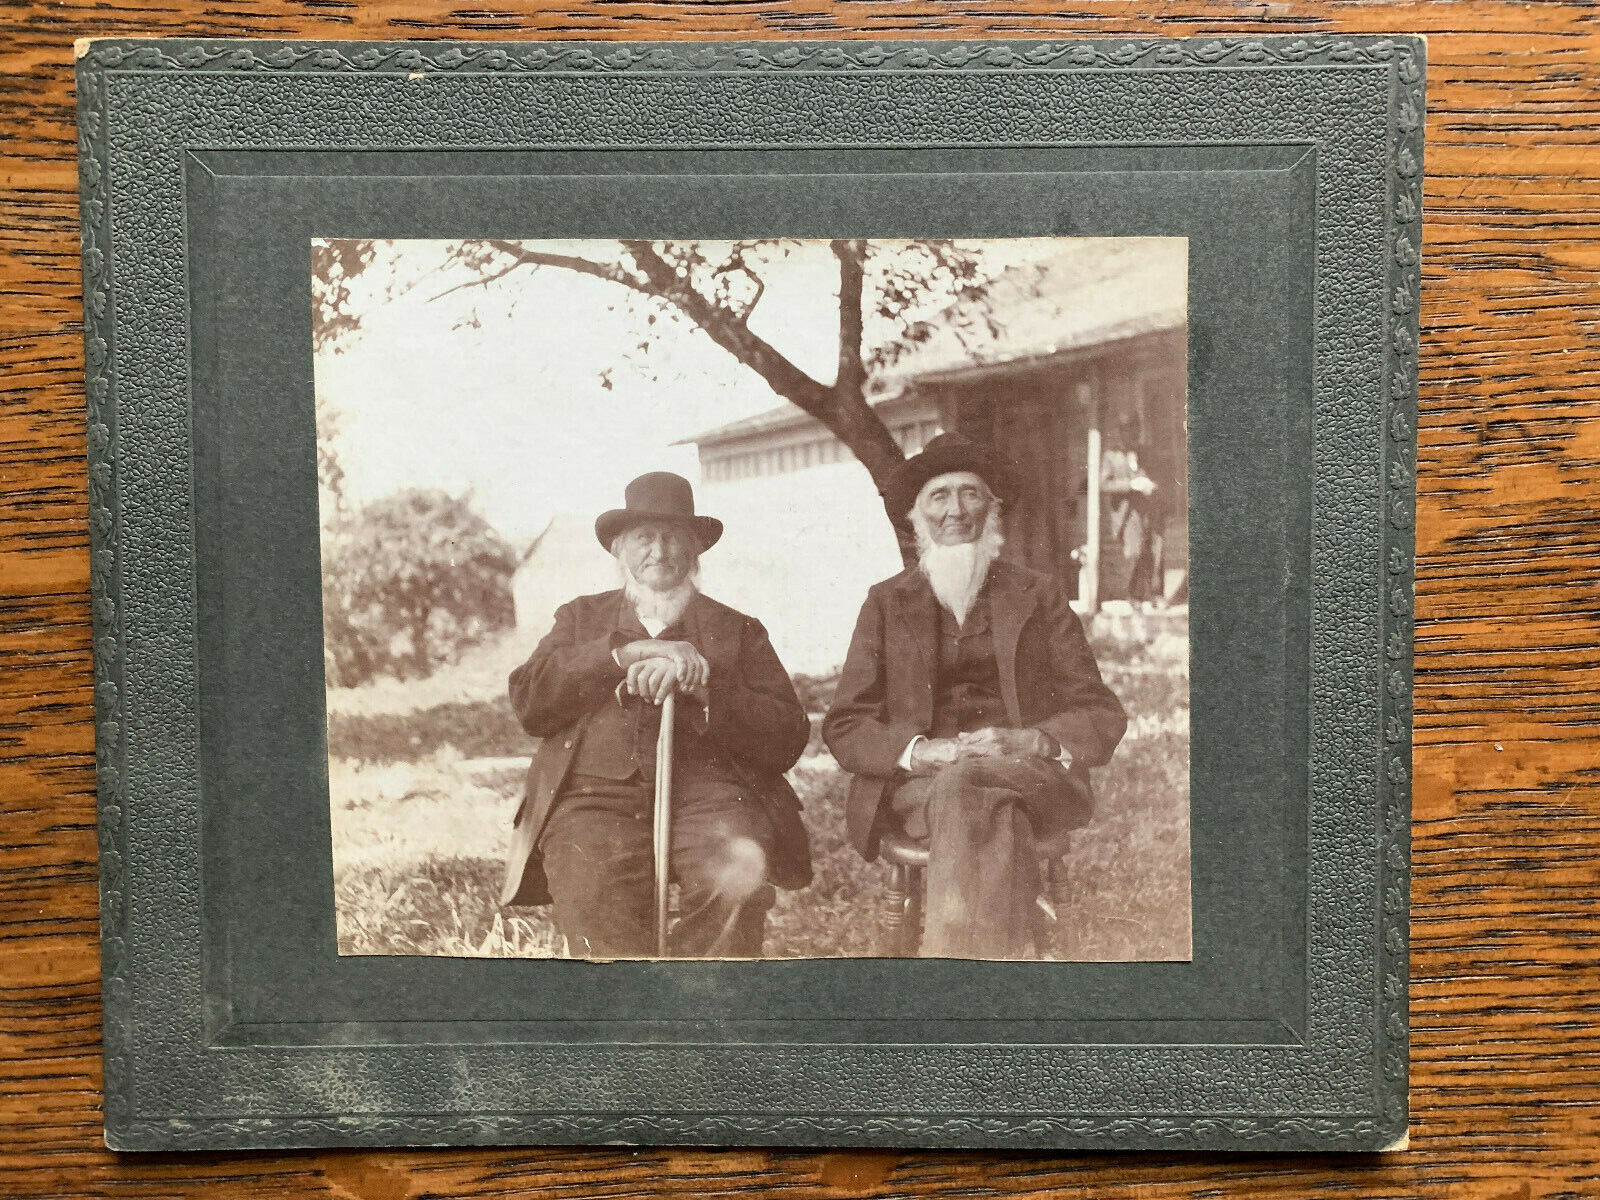 Antique Photograph 2 Elderly Gentlemen with Beards, Amish? Farmers?